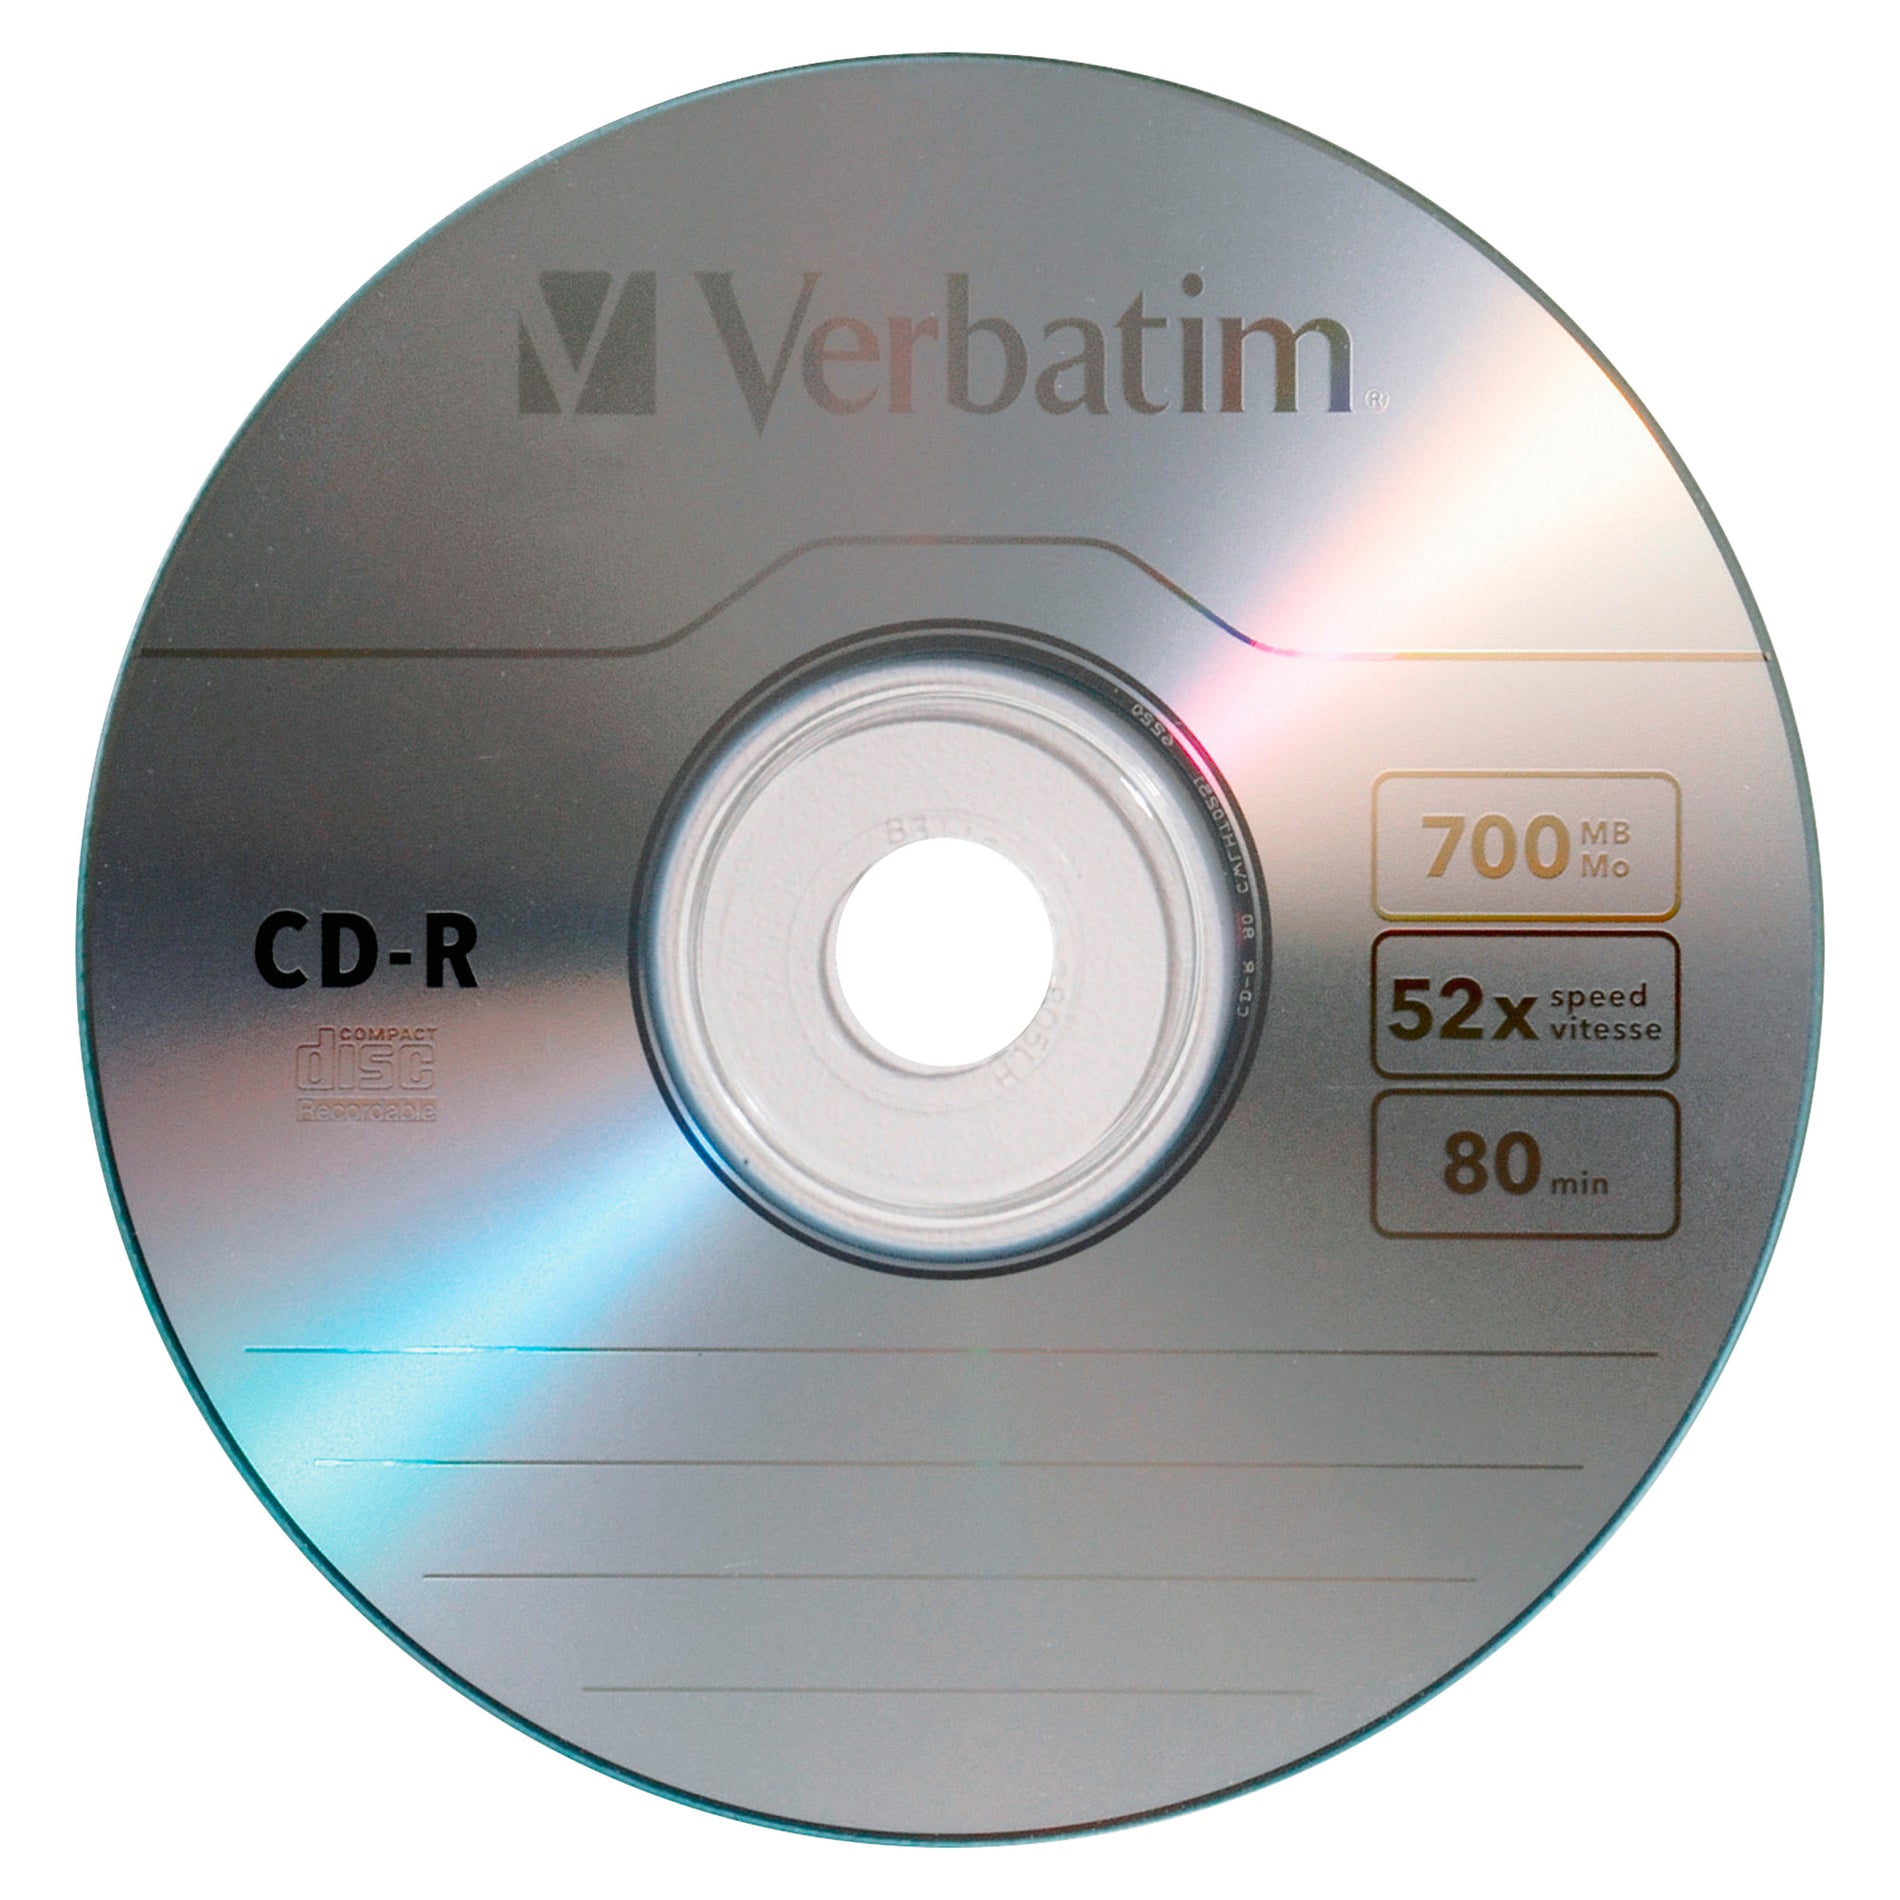 Verbatim 94935 CD-R 700MB 52X with Branded Surface - 10pk Slim Case, Lifetime Warranty